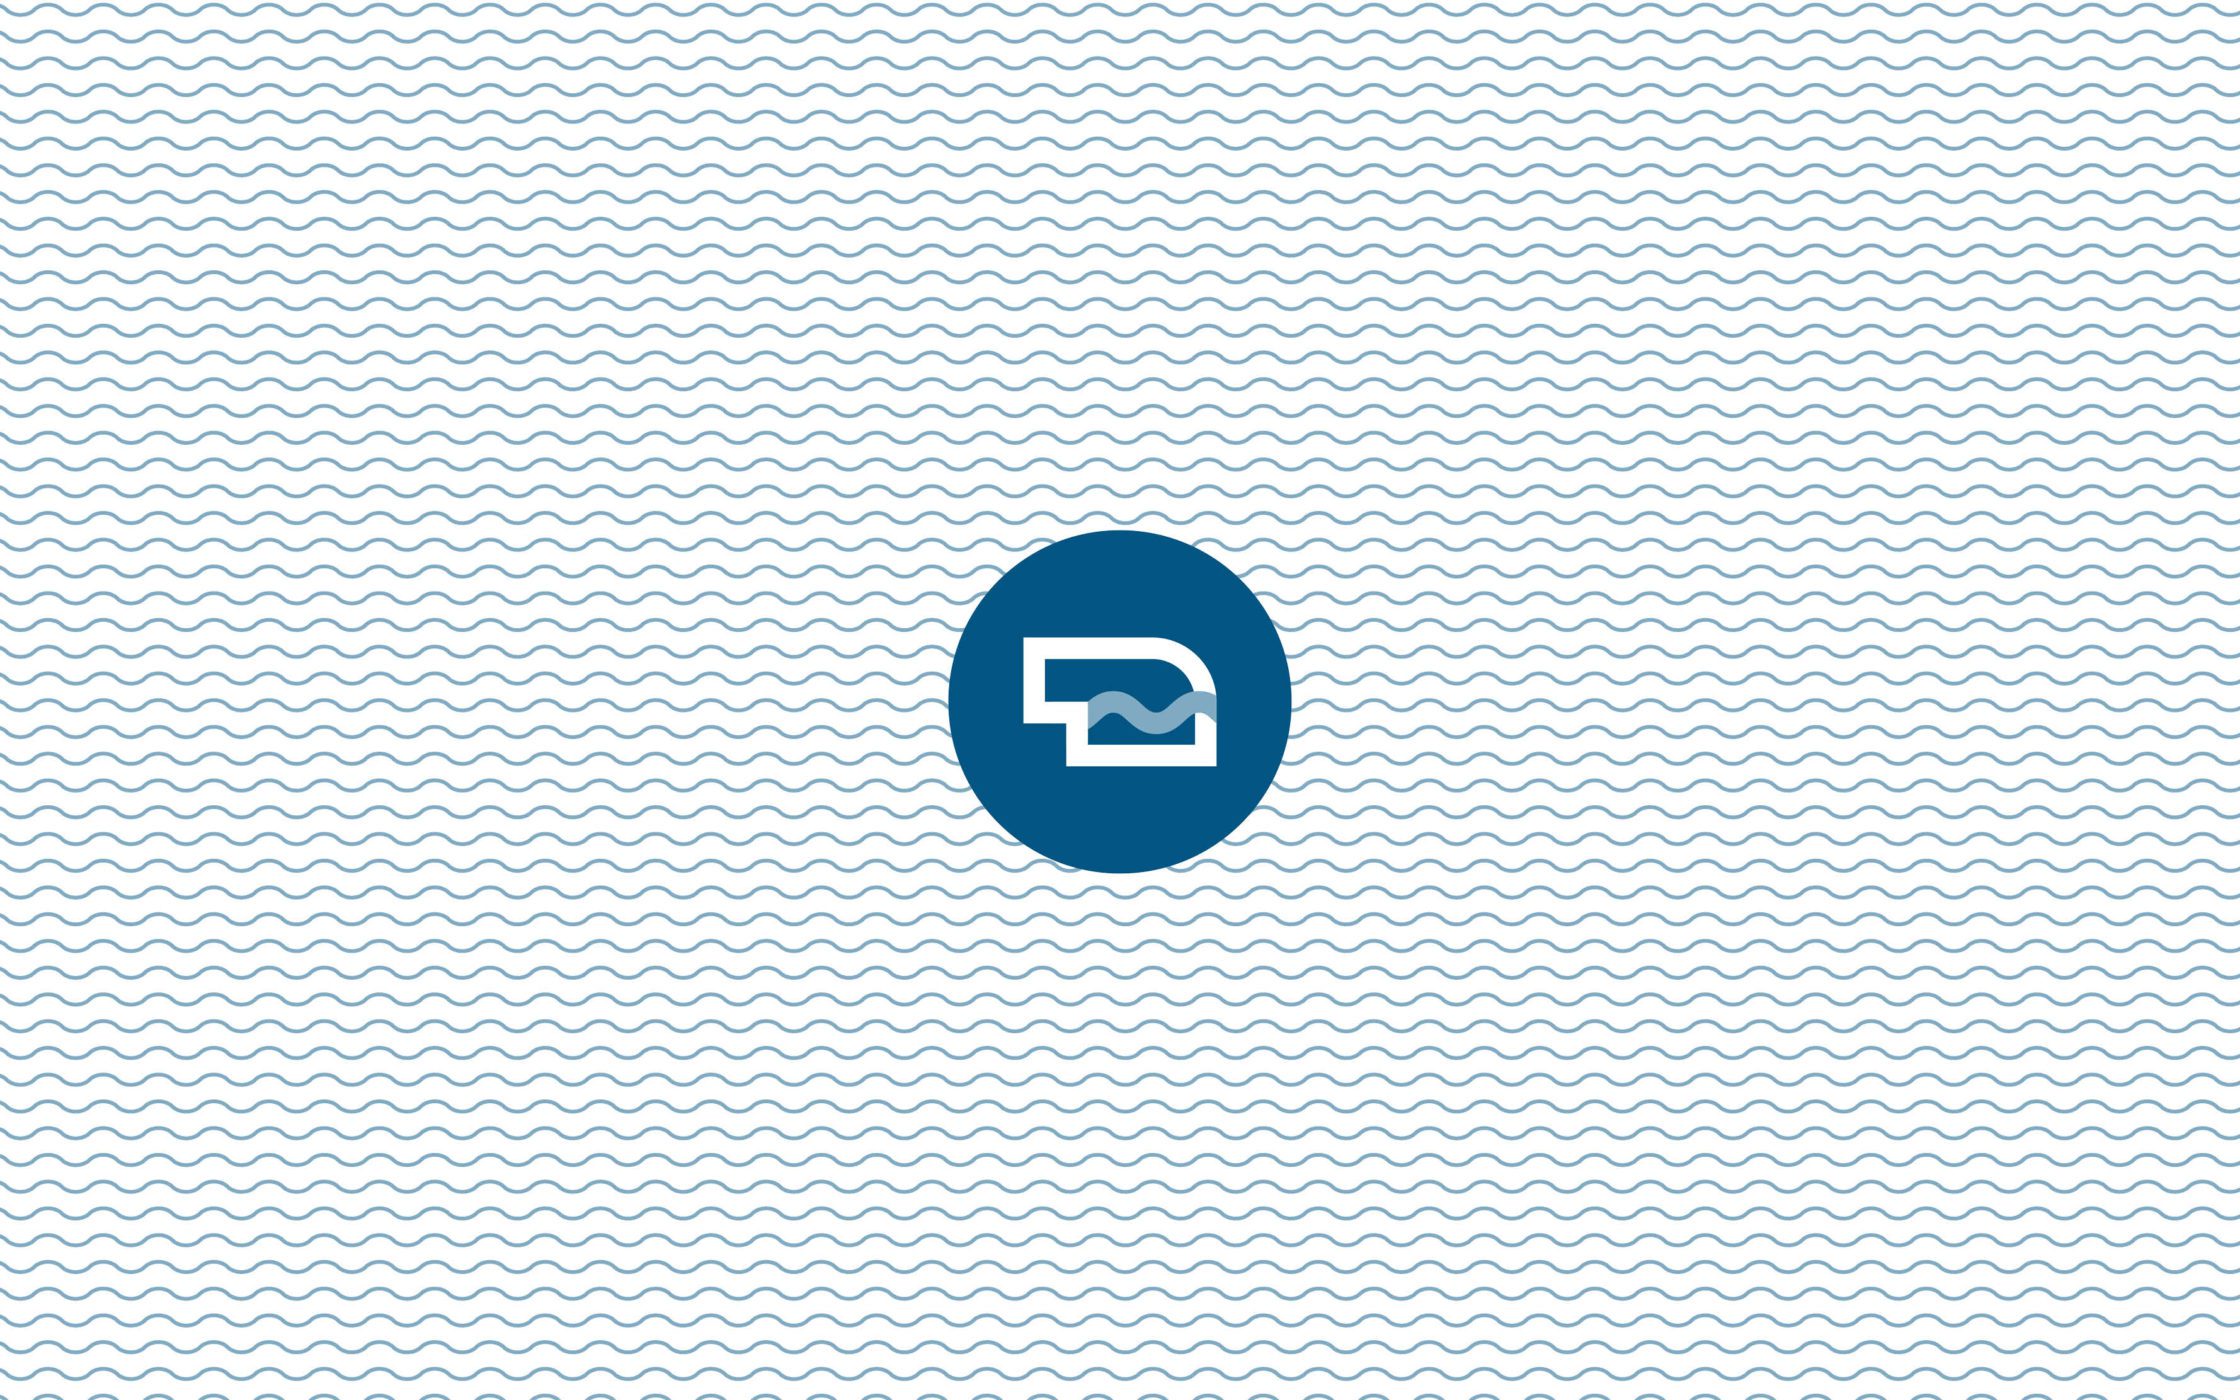 Flatwater Free Press - Fallback image: logo on light blue wavy pattern